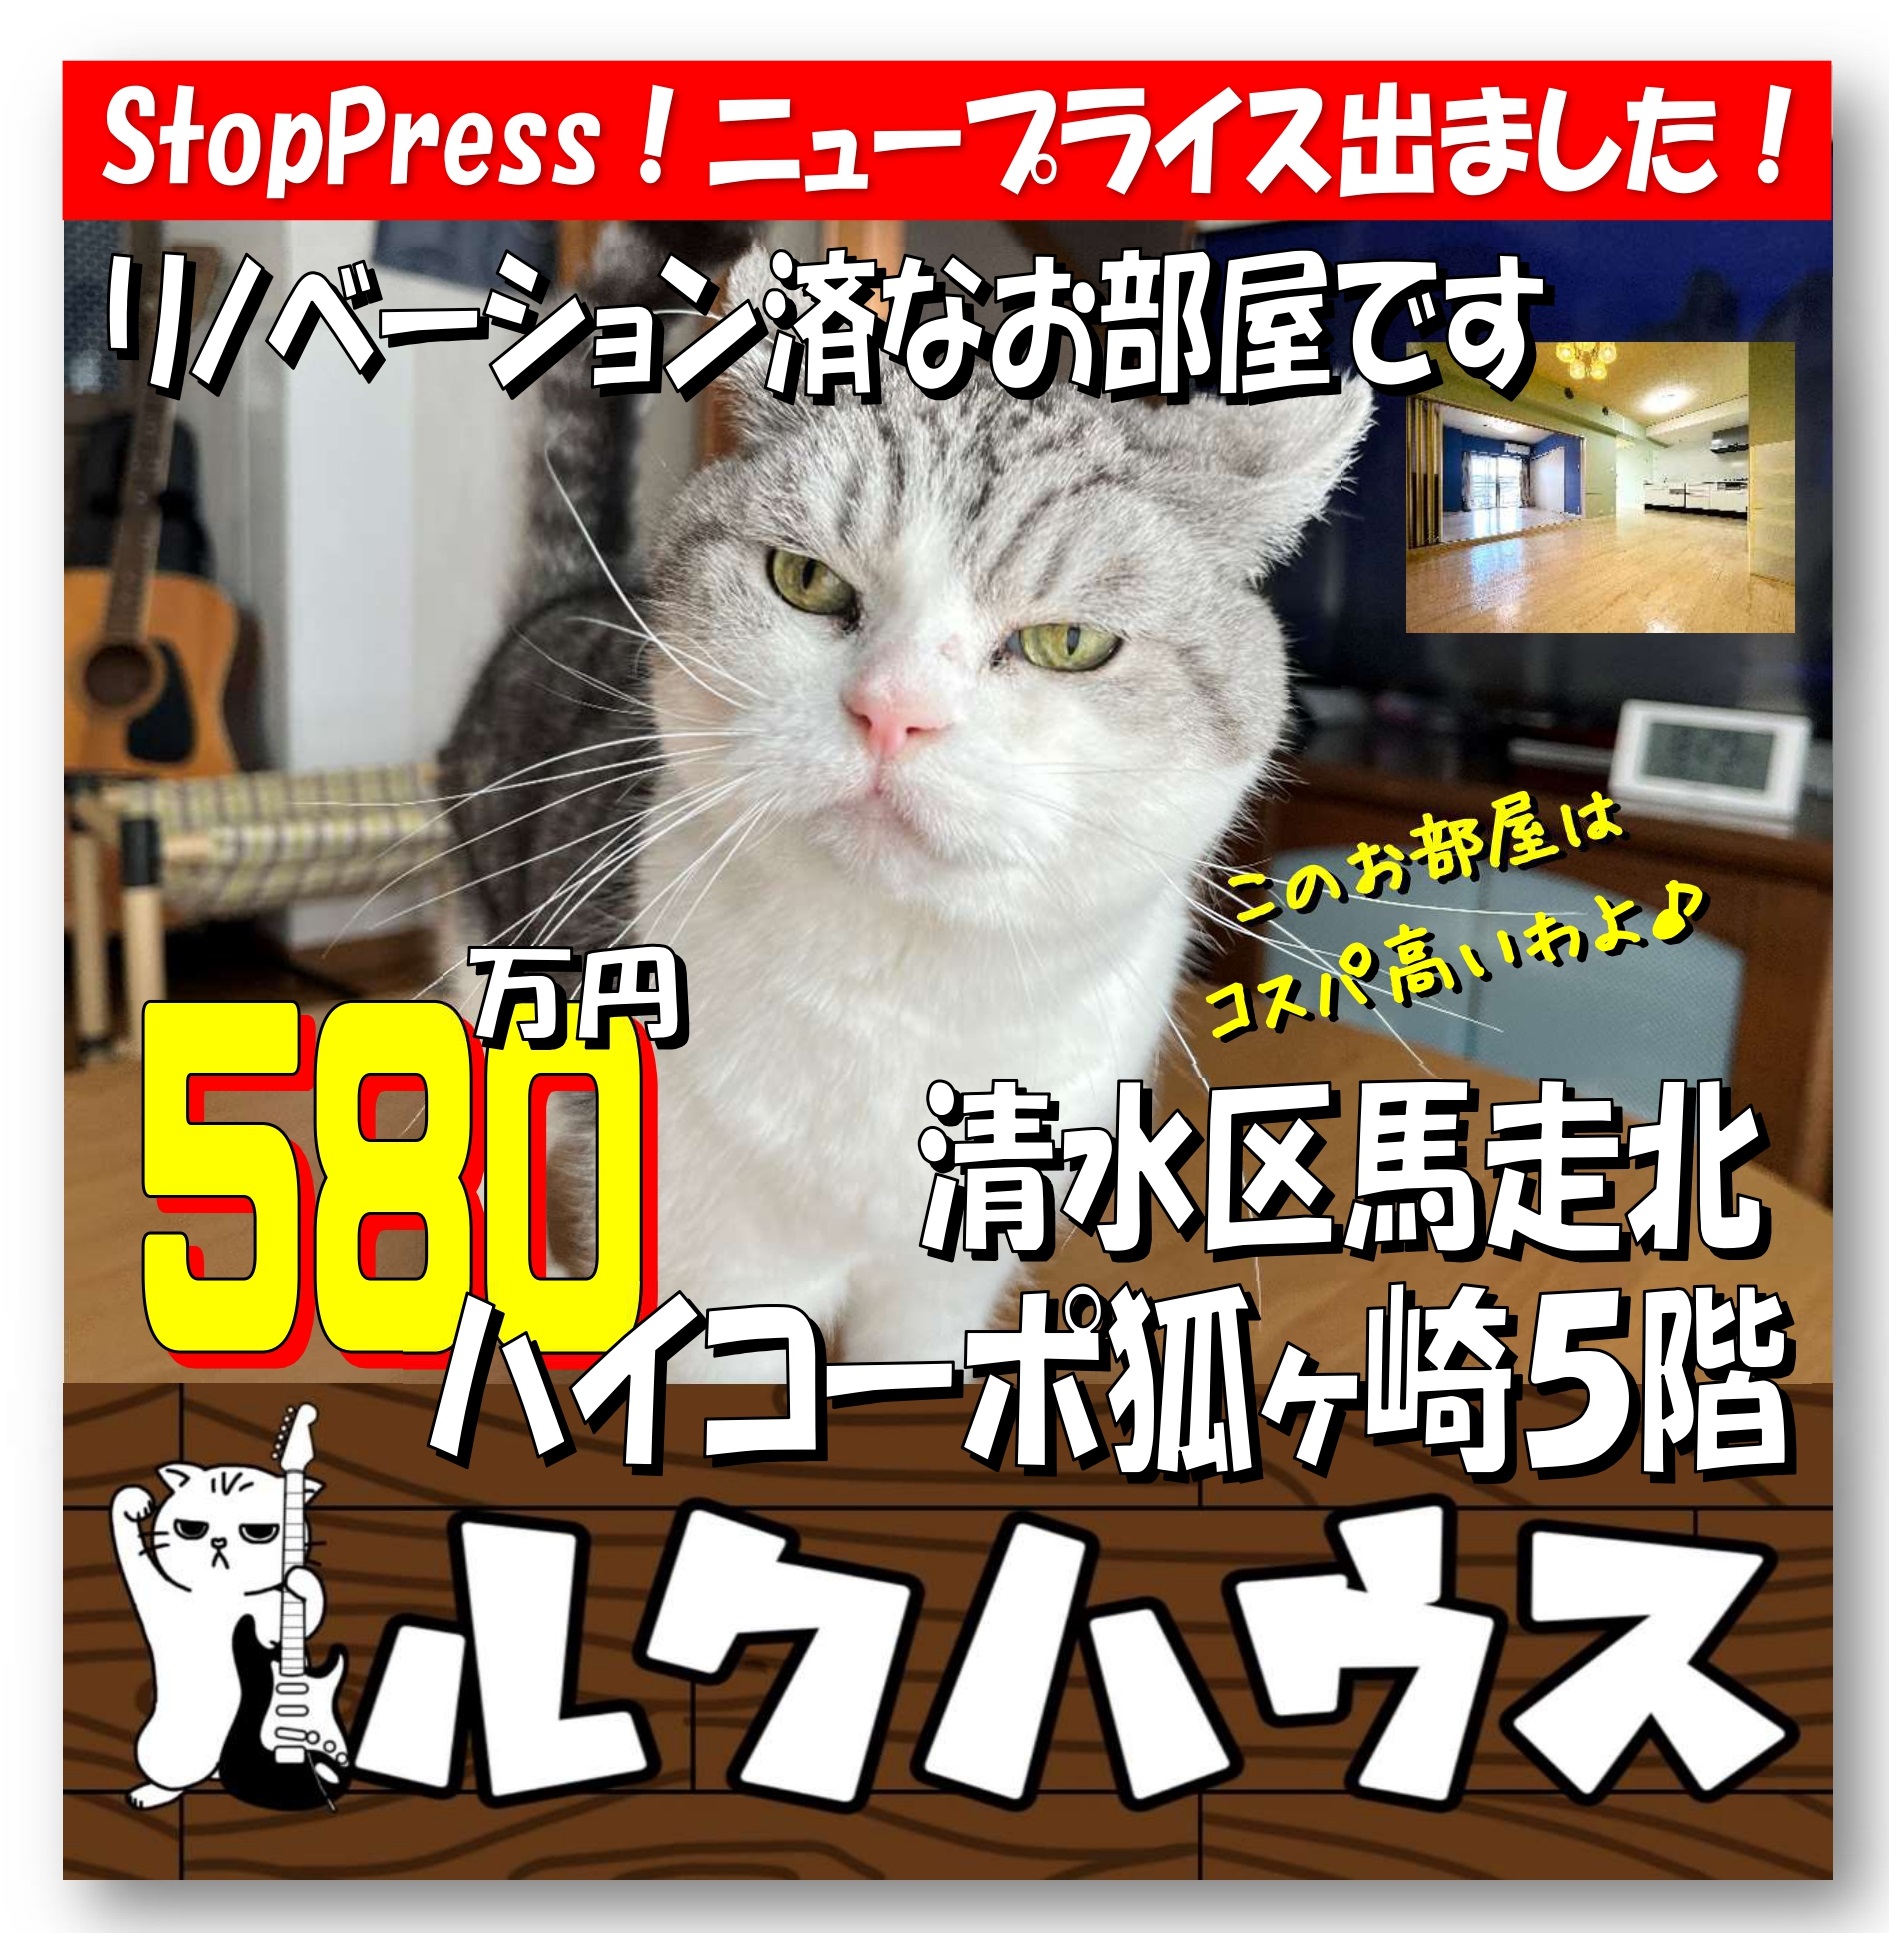 ■StopPress！ニュープライスは580万円■　清水区馬走北・ハイコーポ狐ヶ崎5階